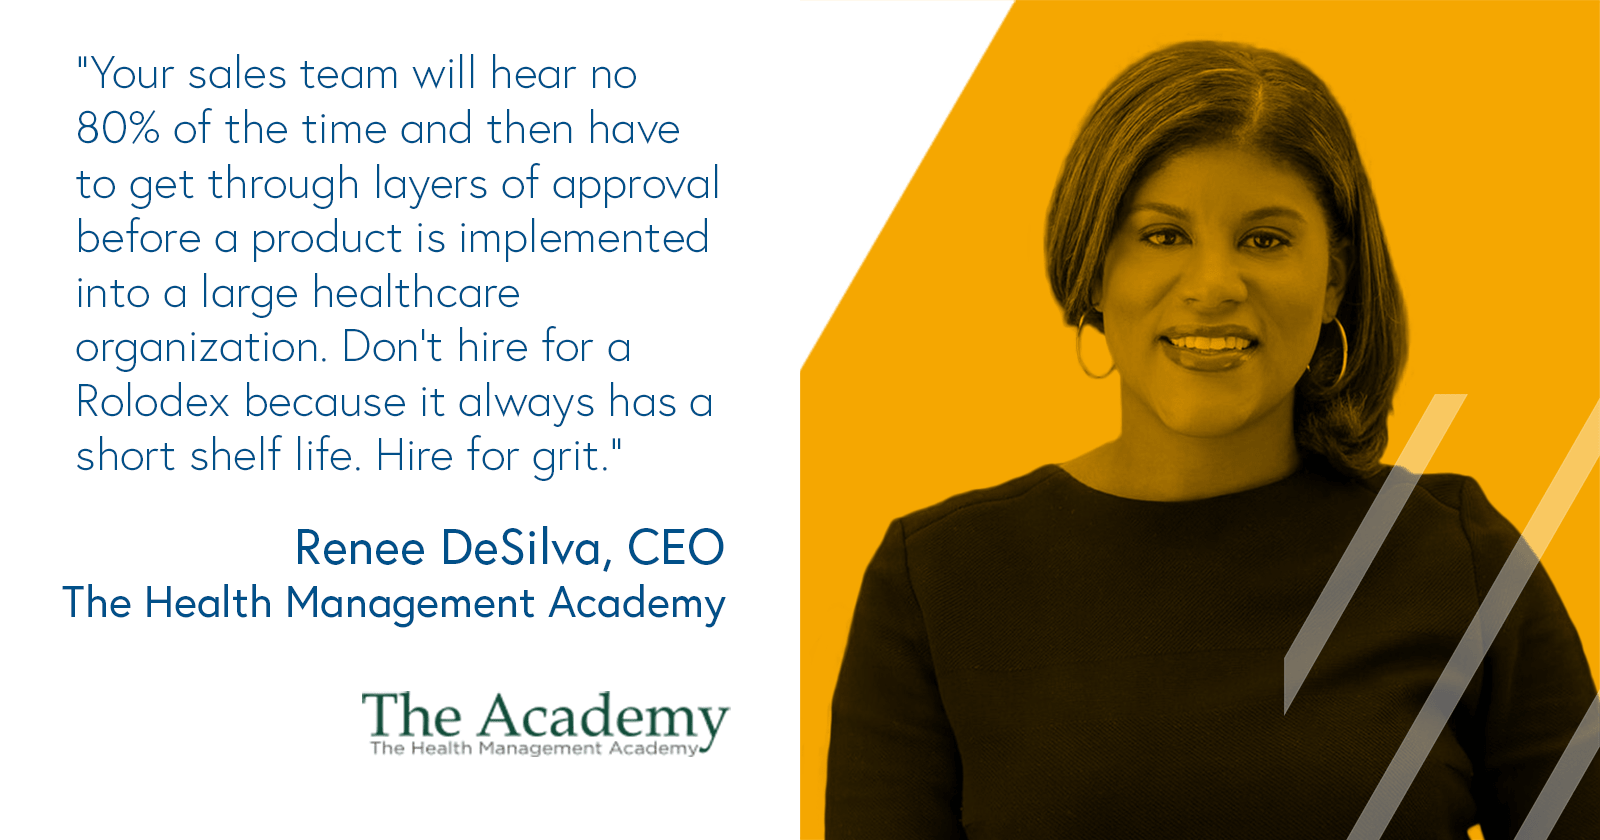 Renee DeSilva, CEO The Health Management Academy